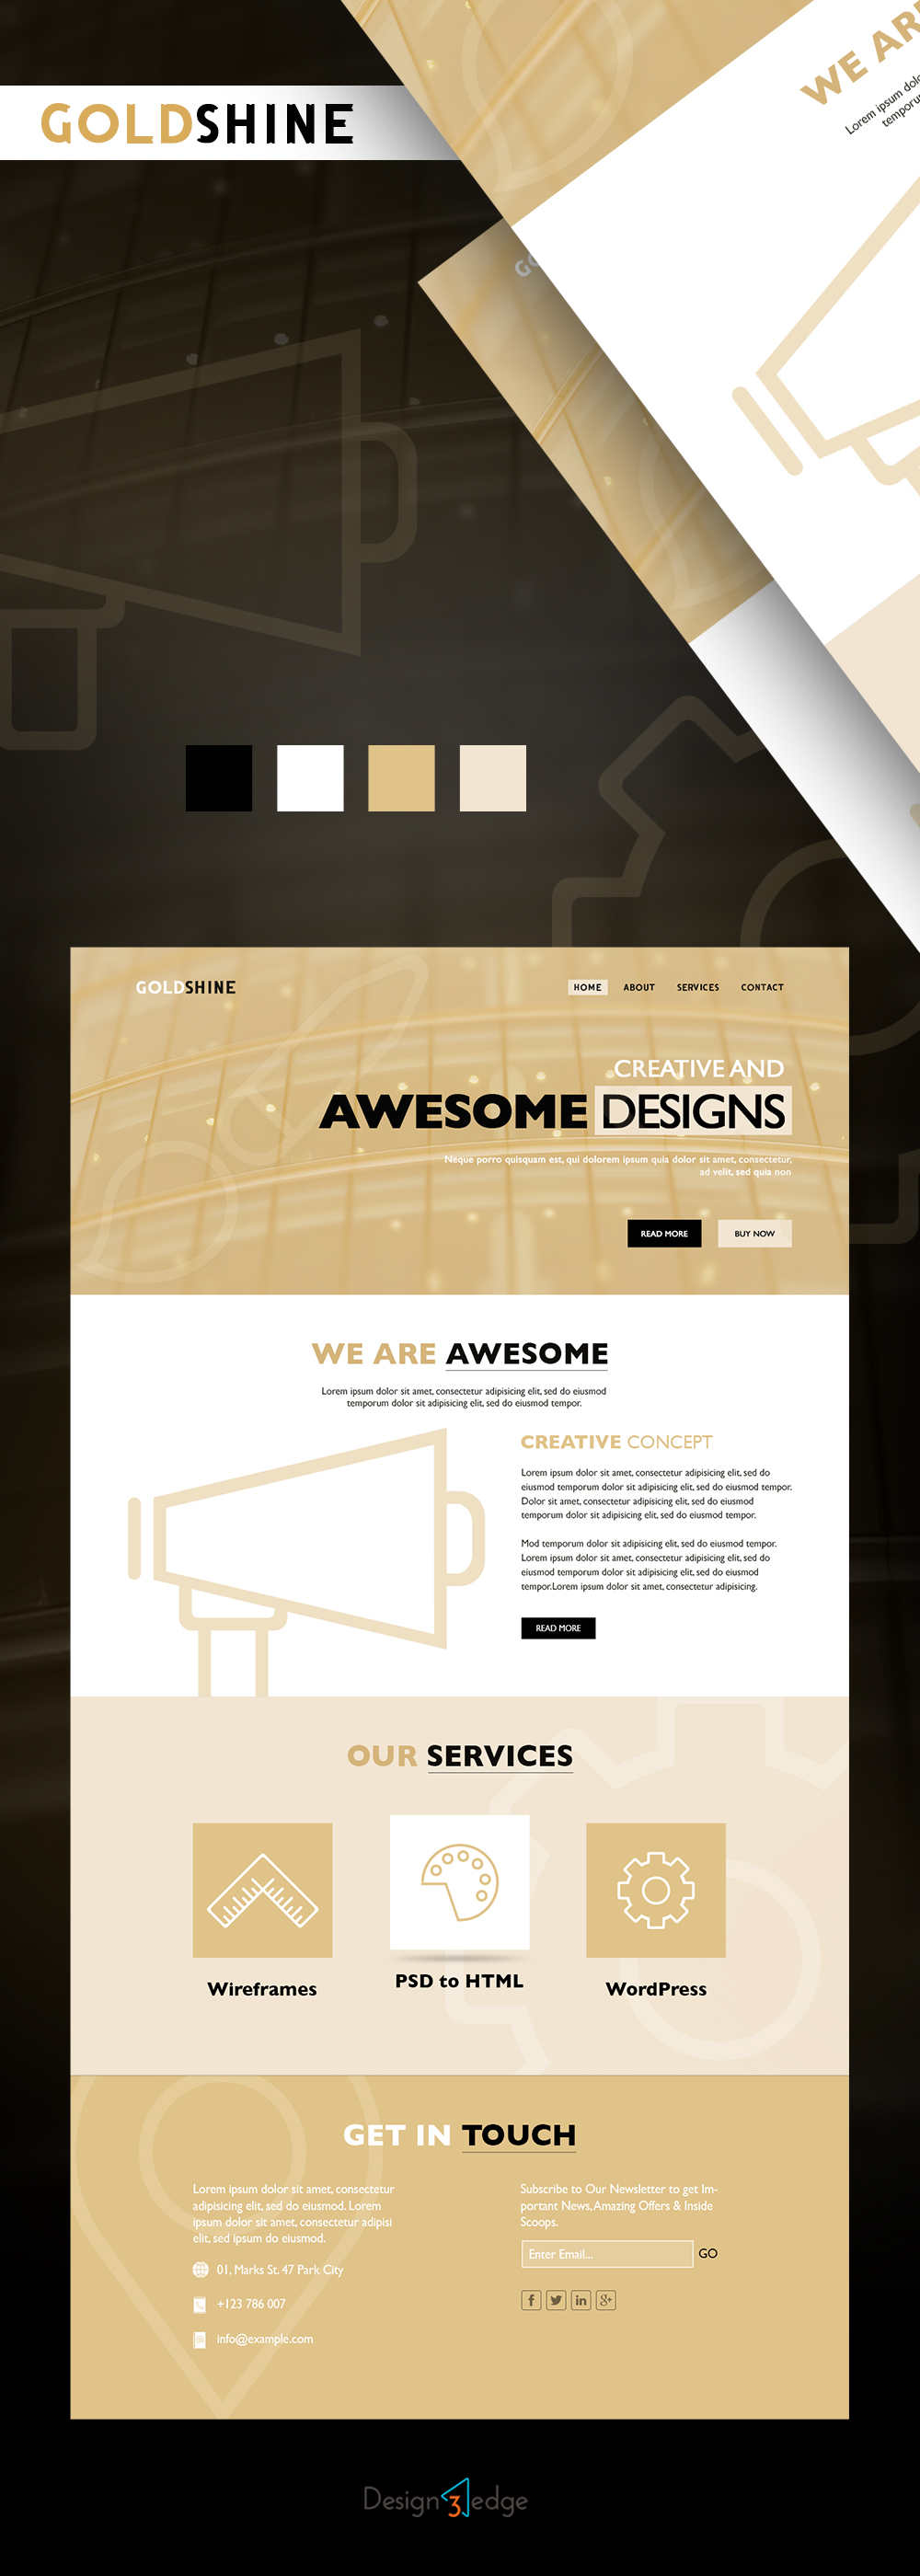 Goldshine Webpage Template Design (PSD)